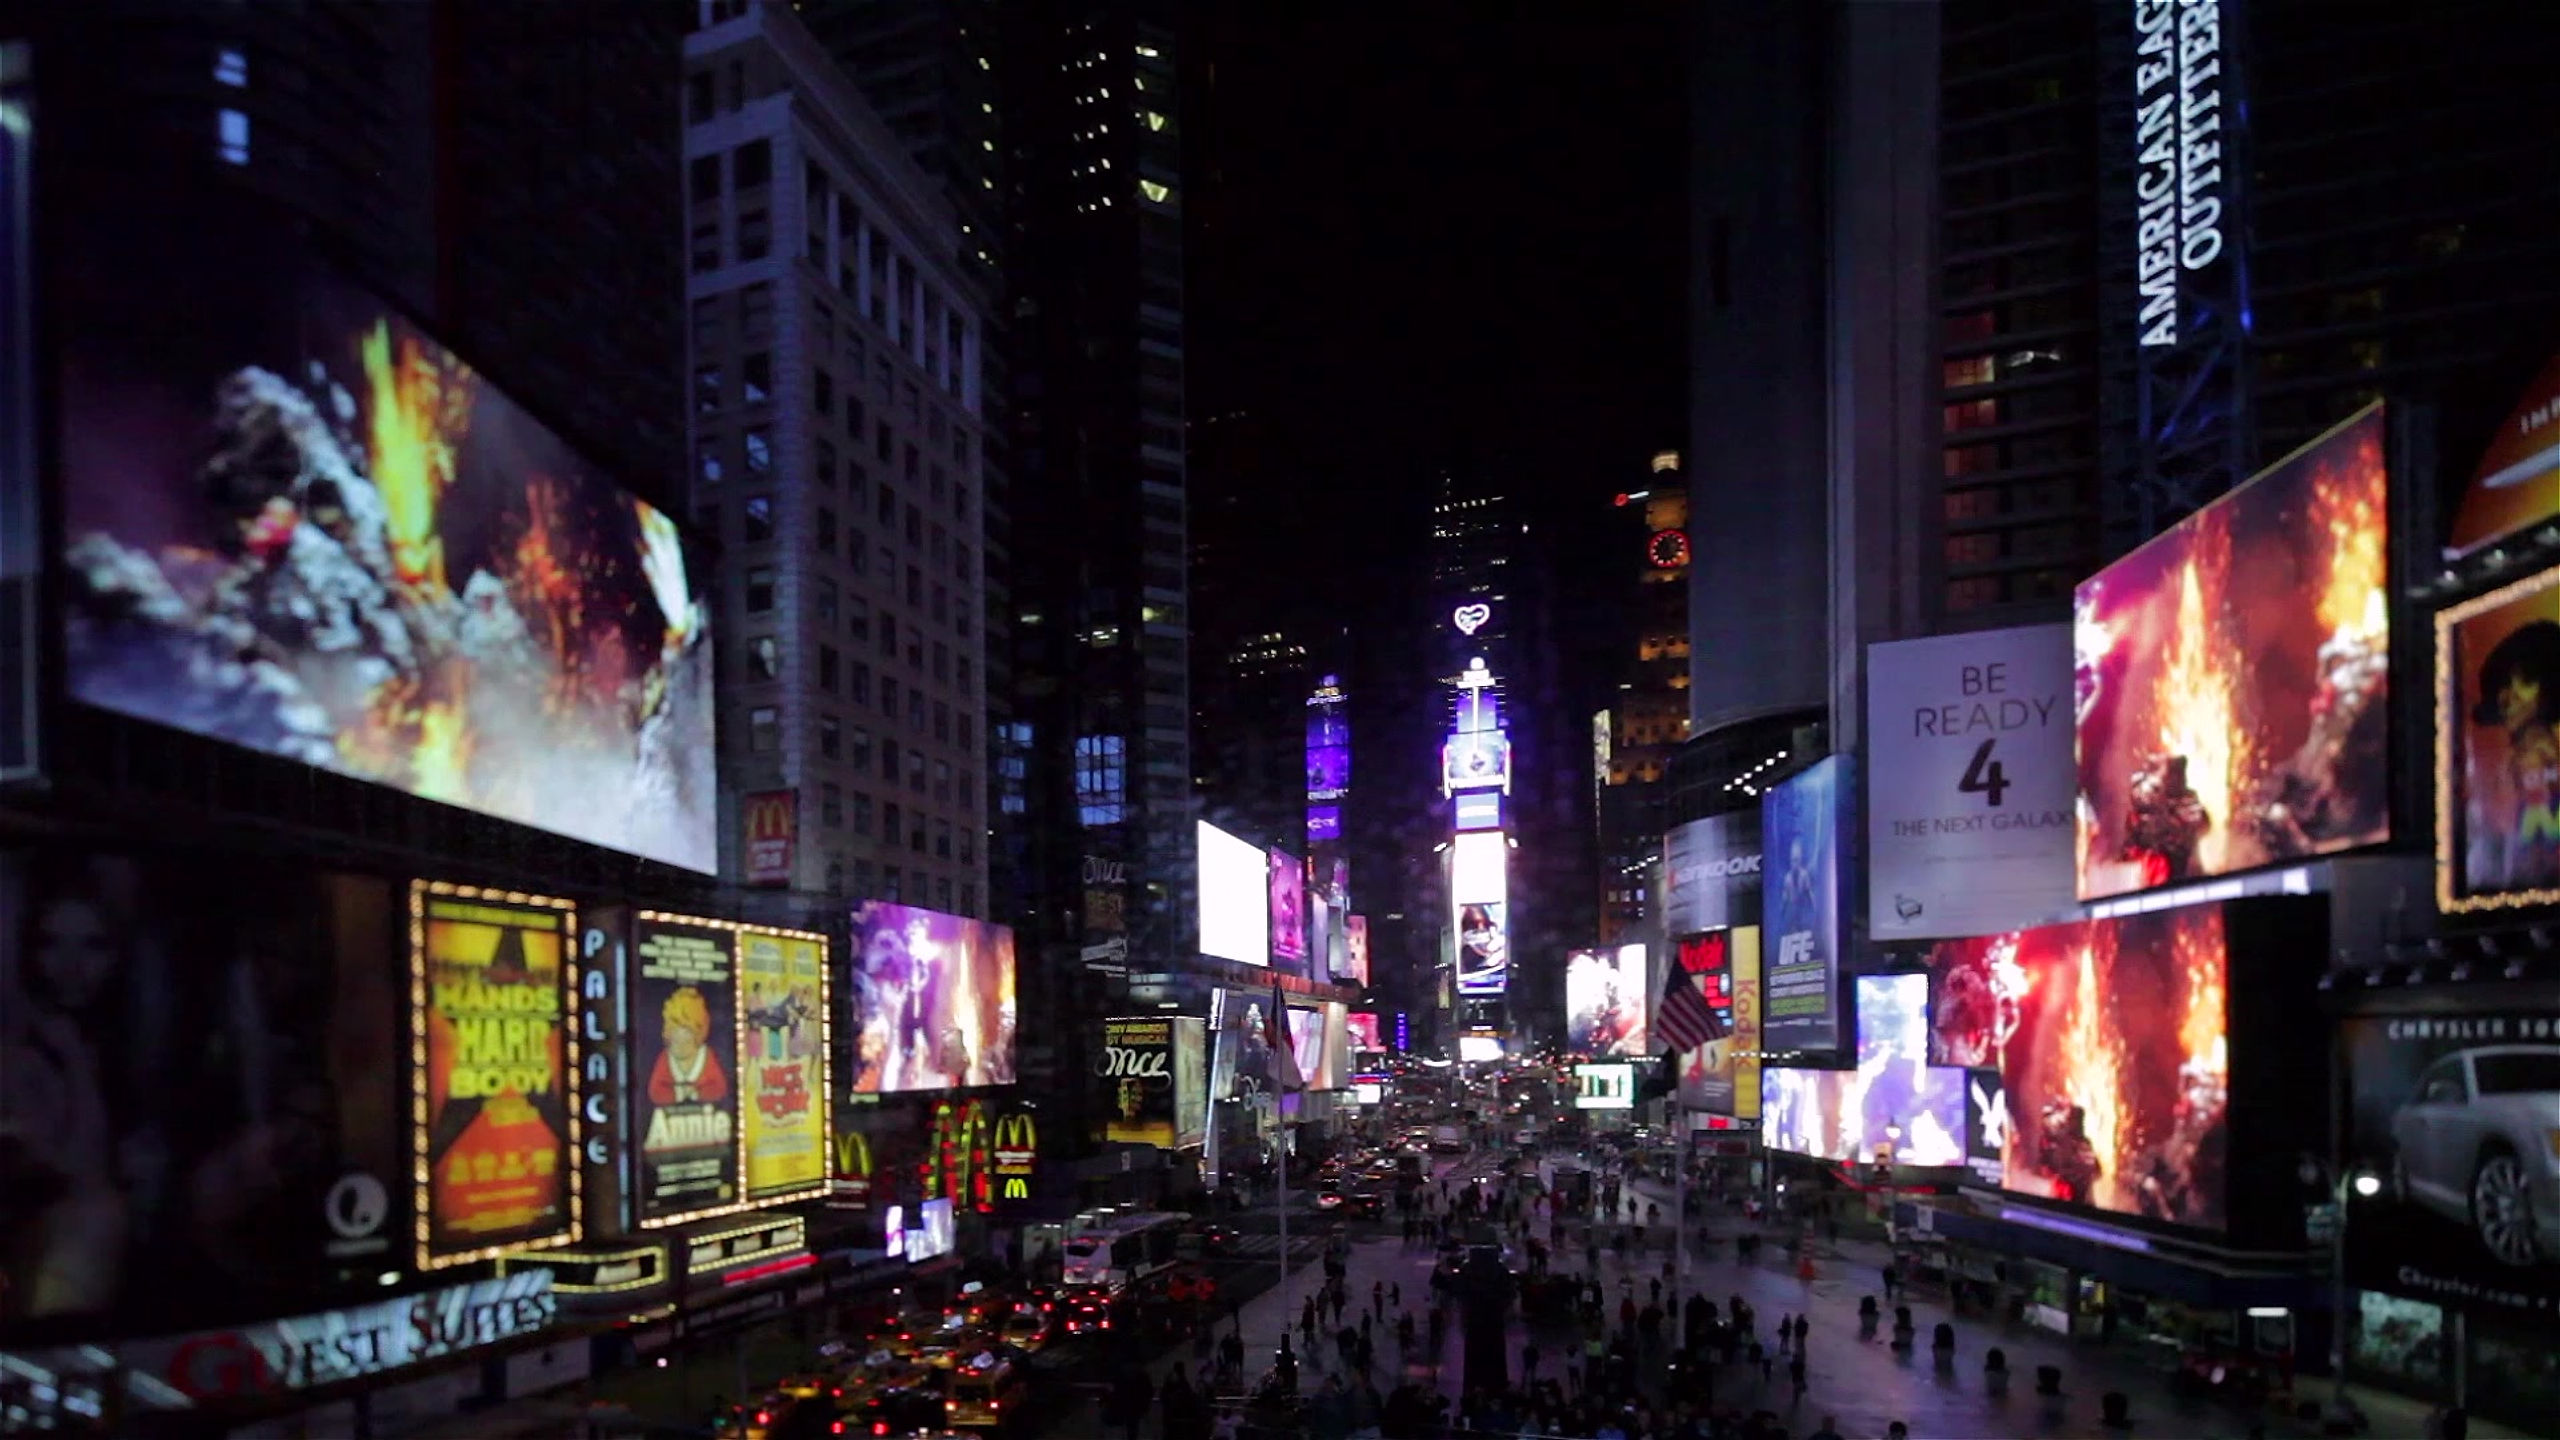 Bjork's "Mutual Core" in Times Square Midnight Moment